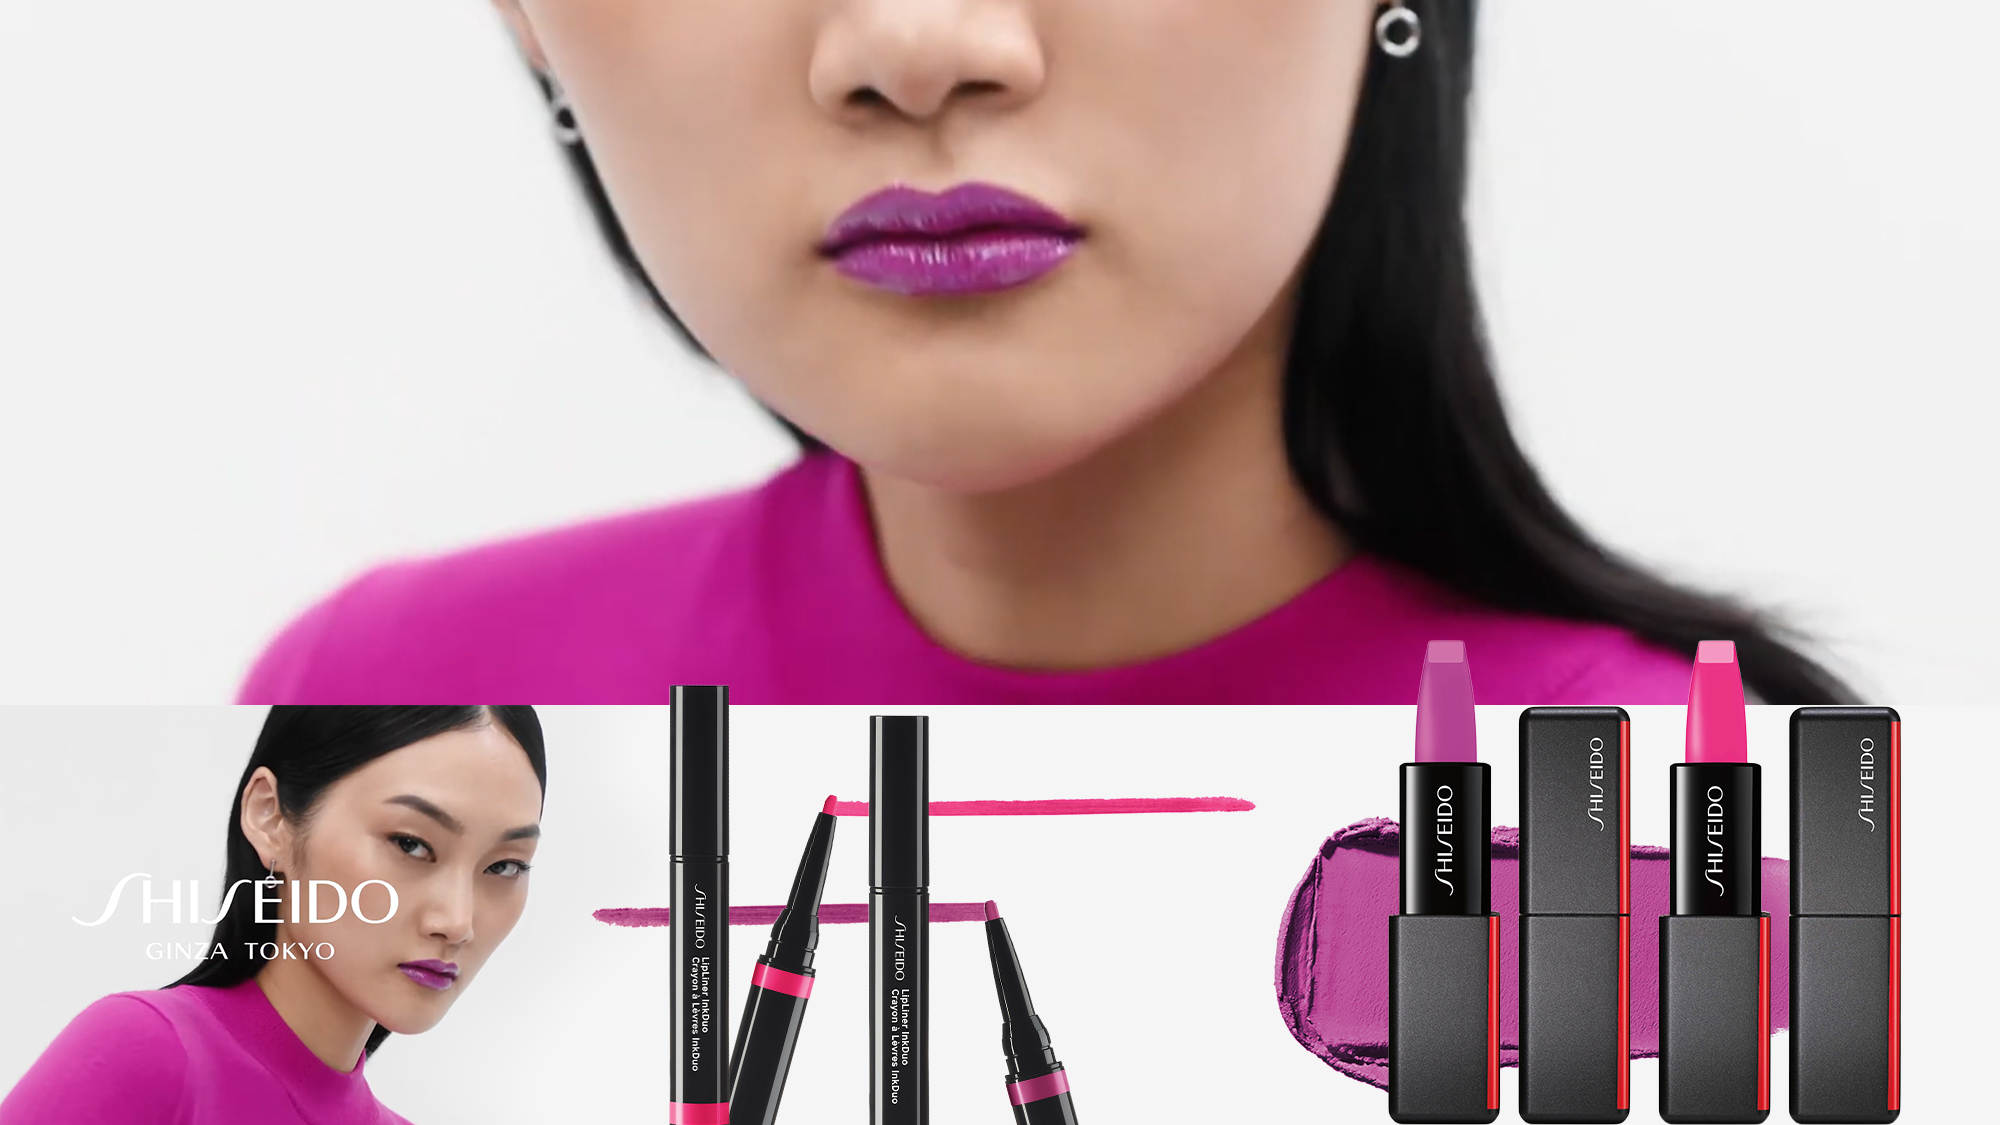 blog-shiseido-violet-look-2000x1125px.jpg